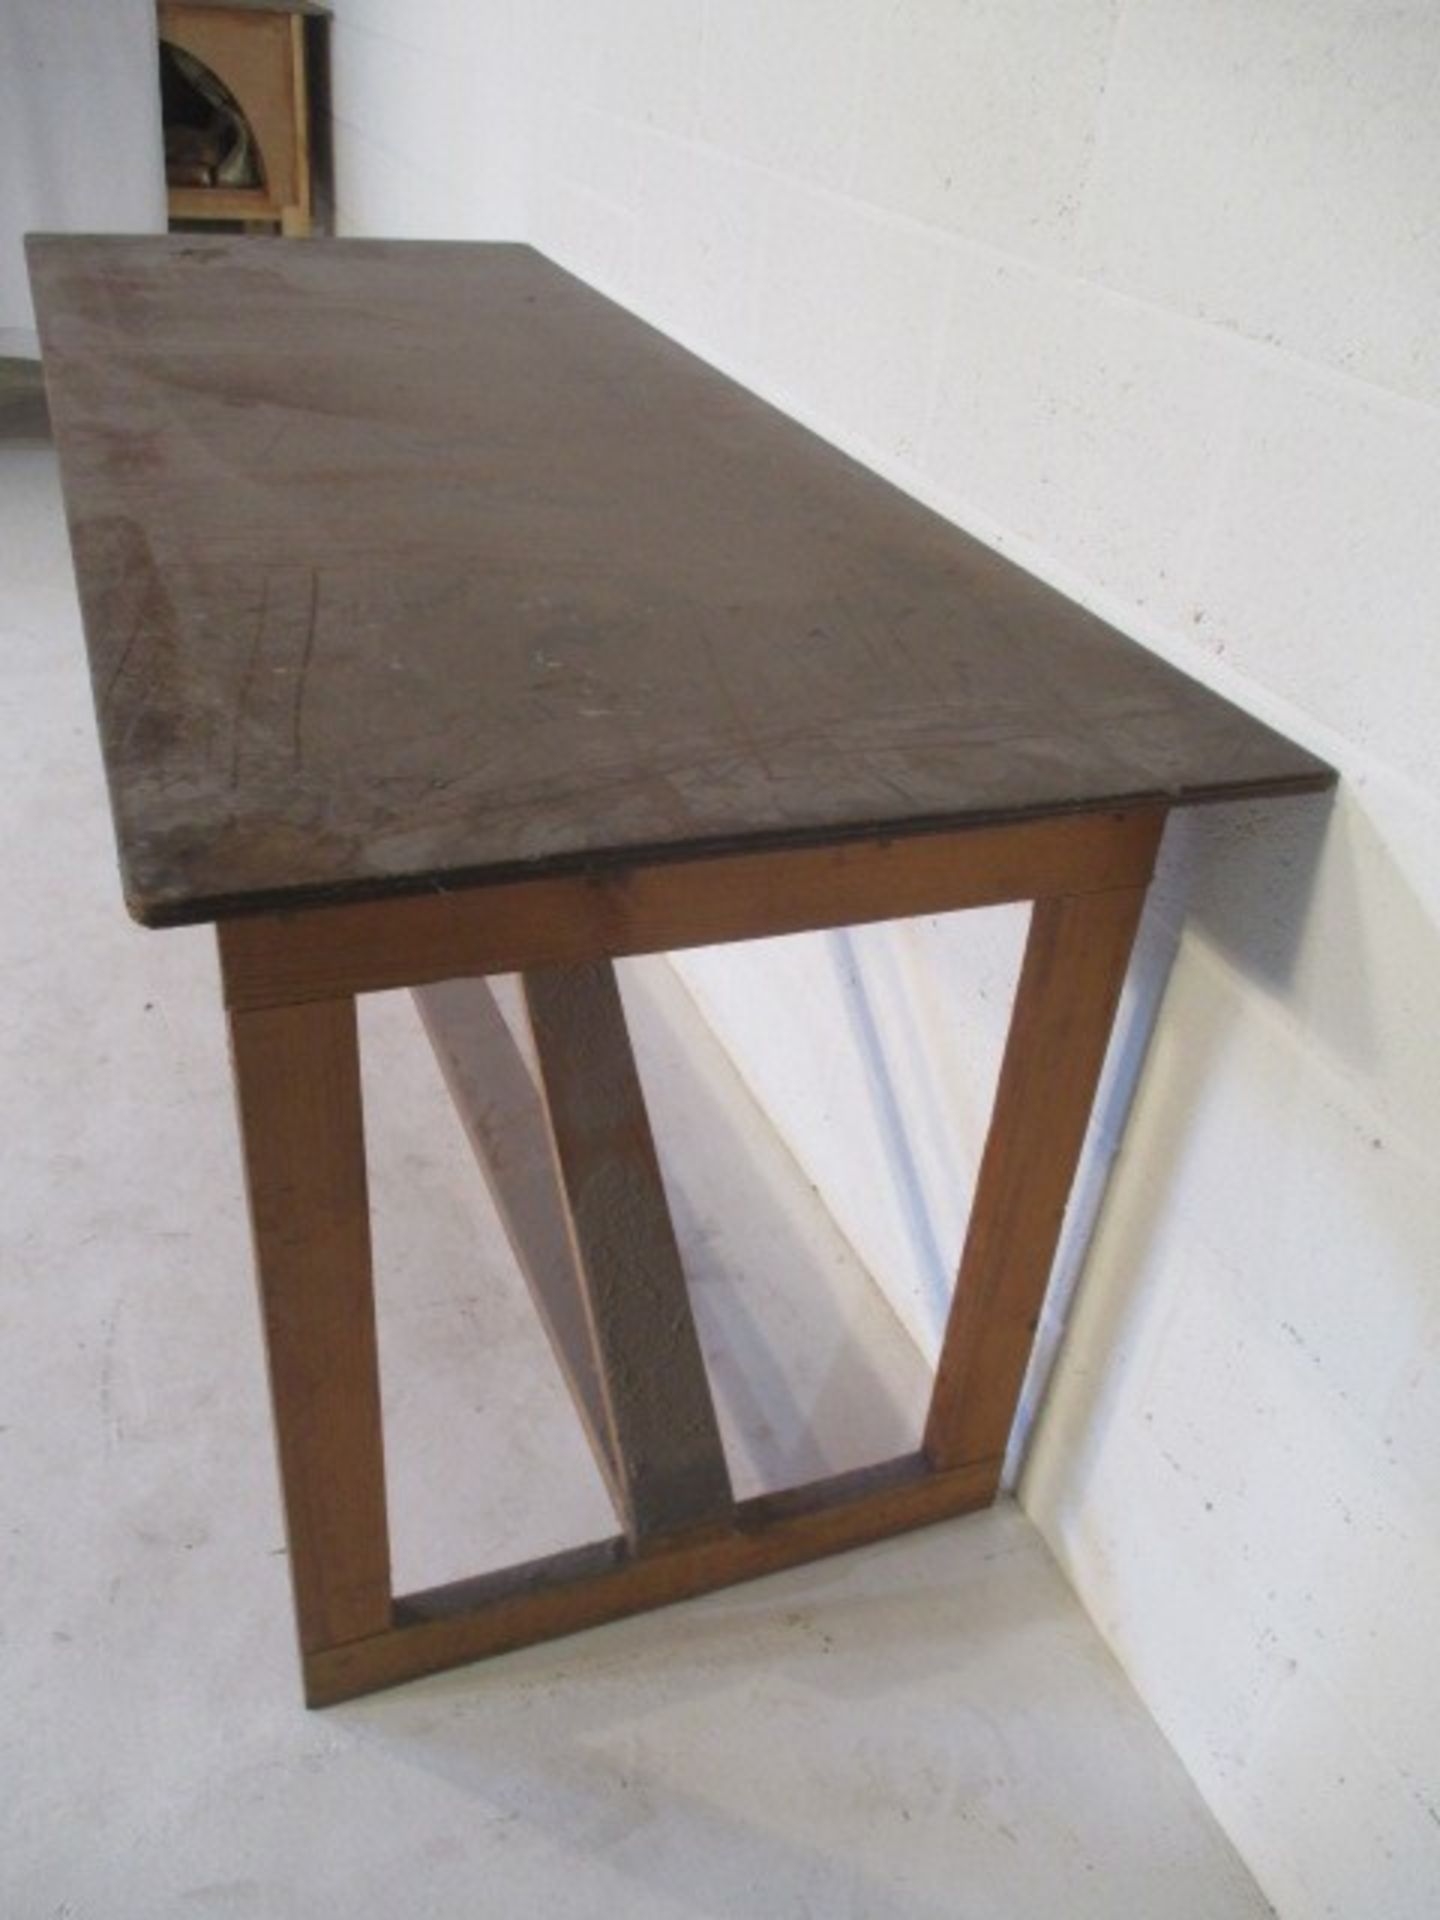 A handmade trestle style table, 205 cm x 72 cm x 90 cm - Image 4 of 5